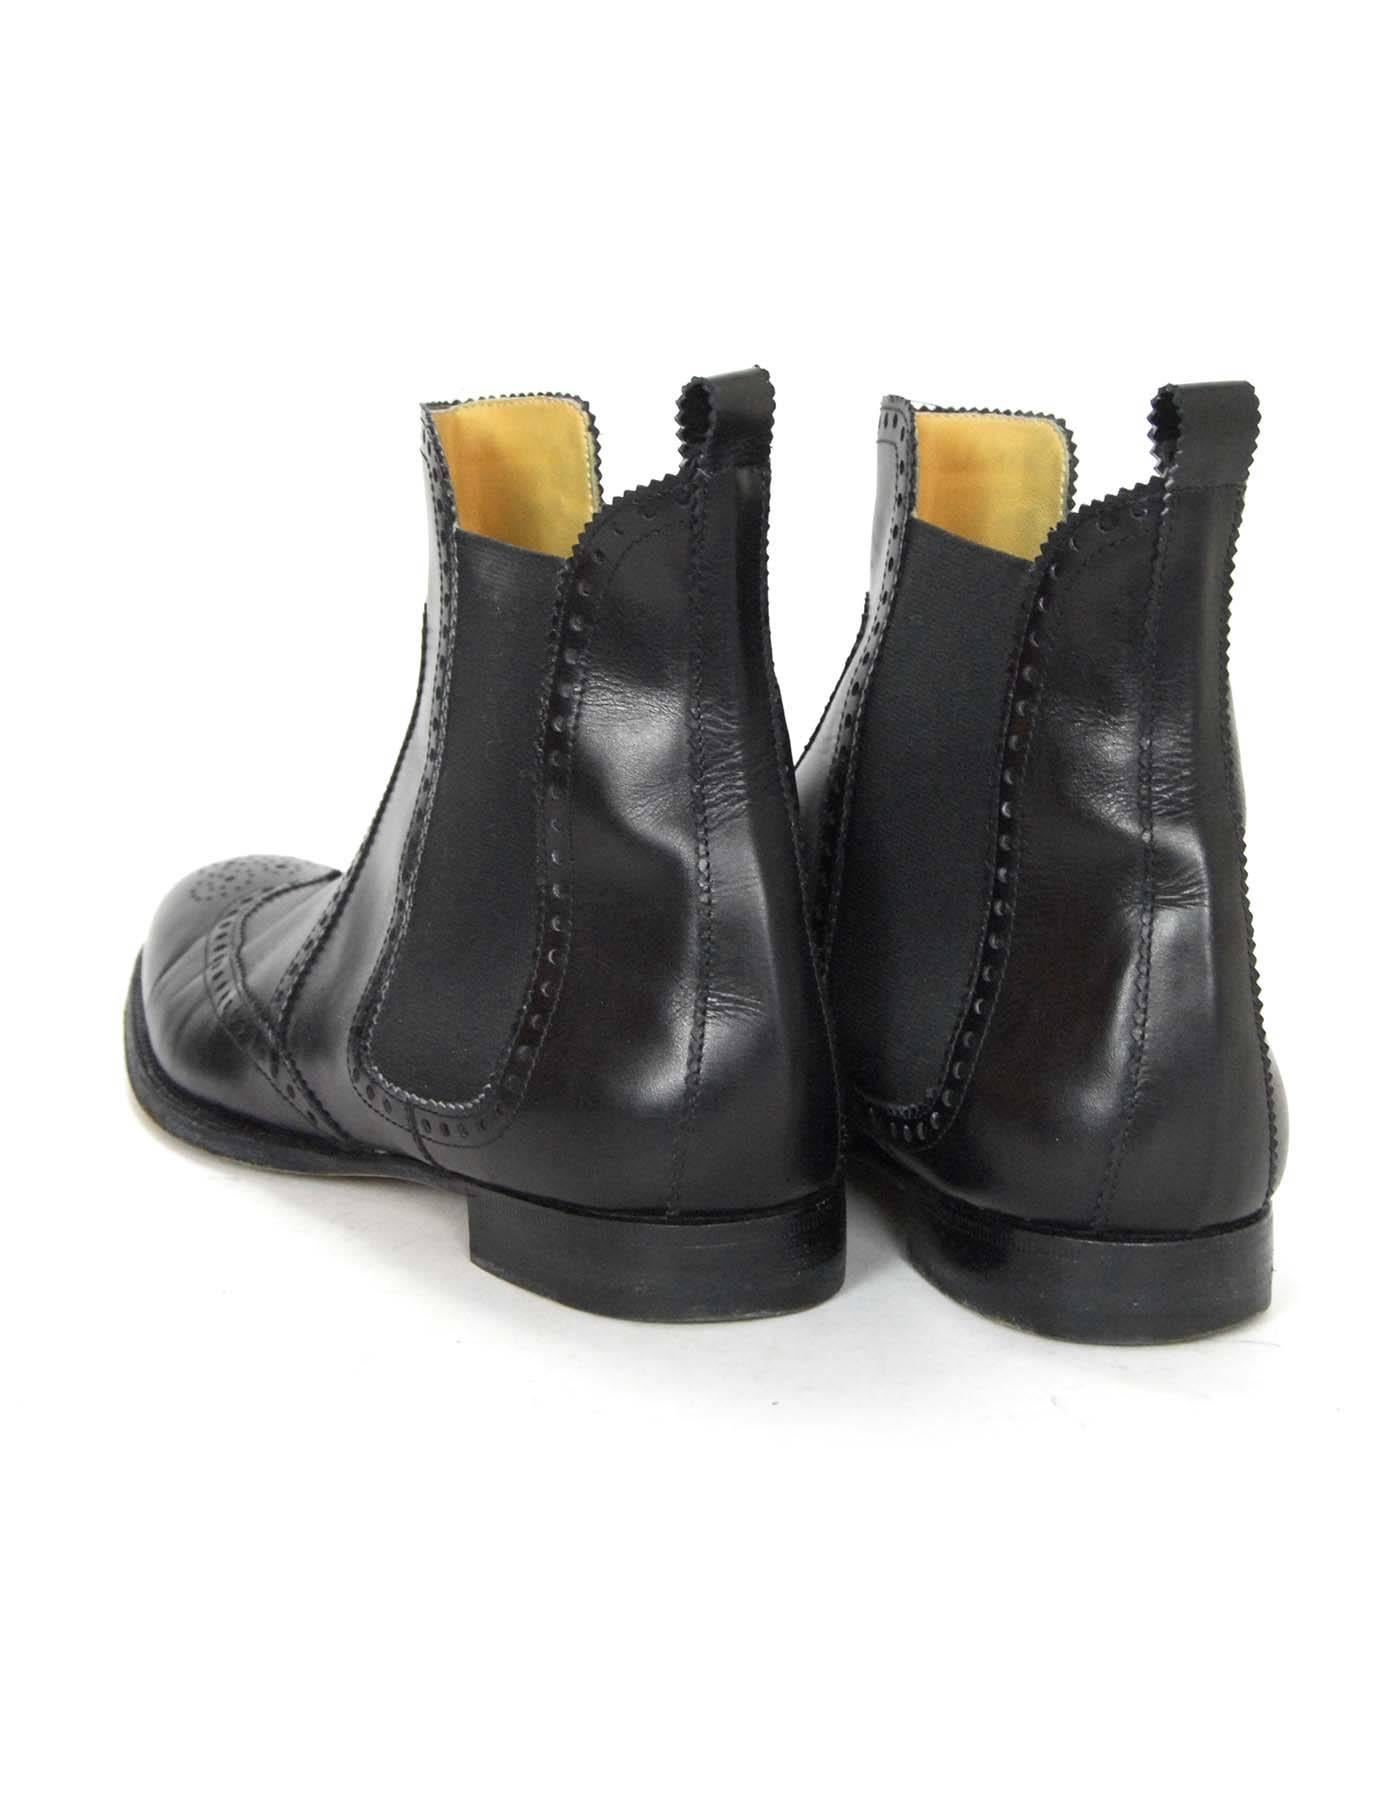 Hermes Black Leather Spectator Brighton Ankle Boots Sz 41 rt. $1, 225 1